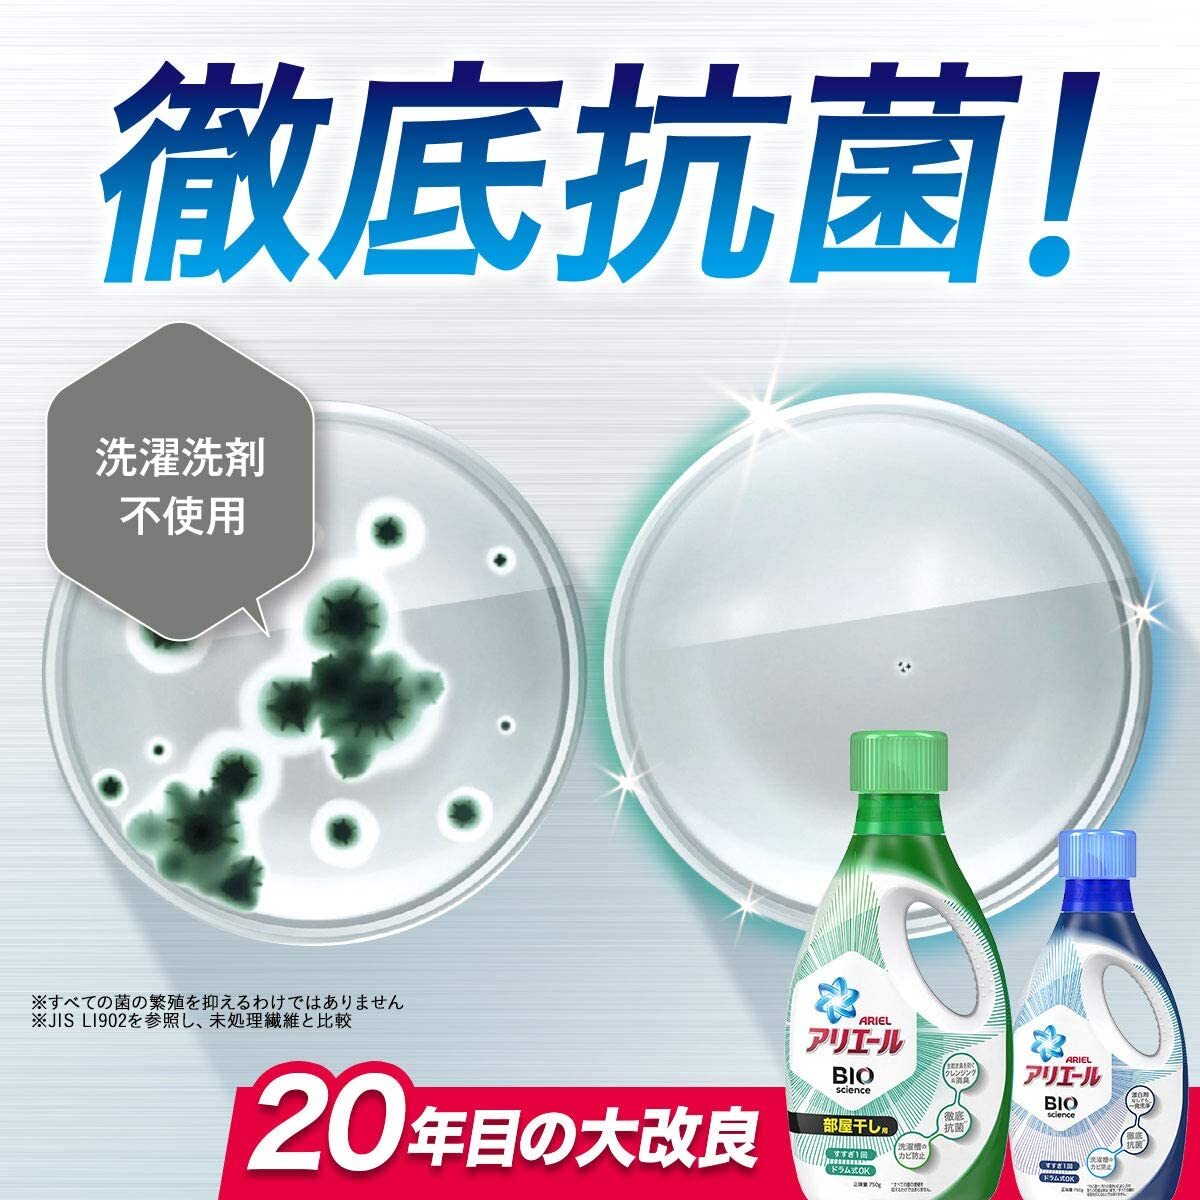 P&G Ariel BioScience Laundry Detergent Gel Antibacterial 750g